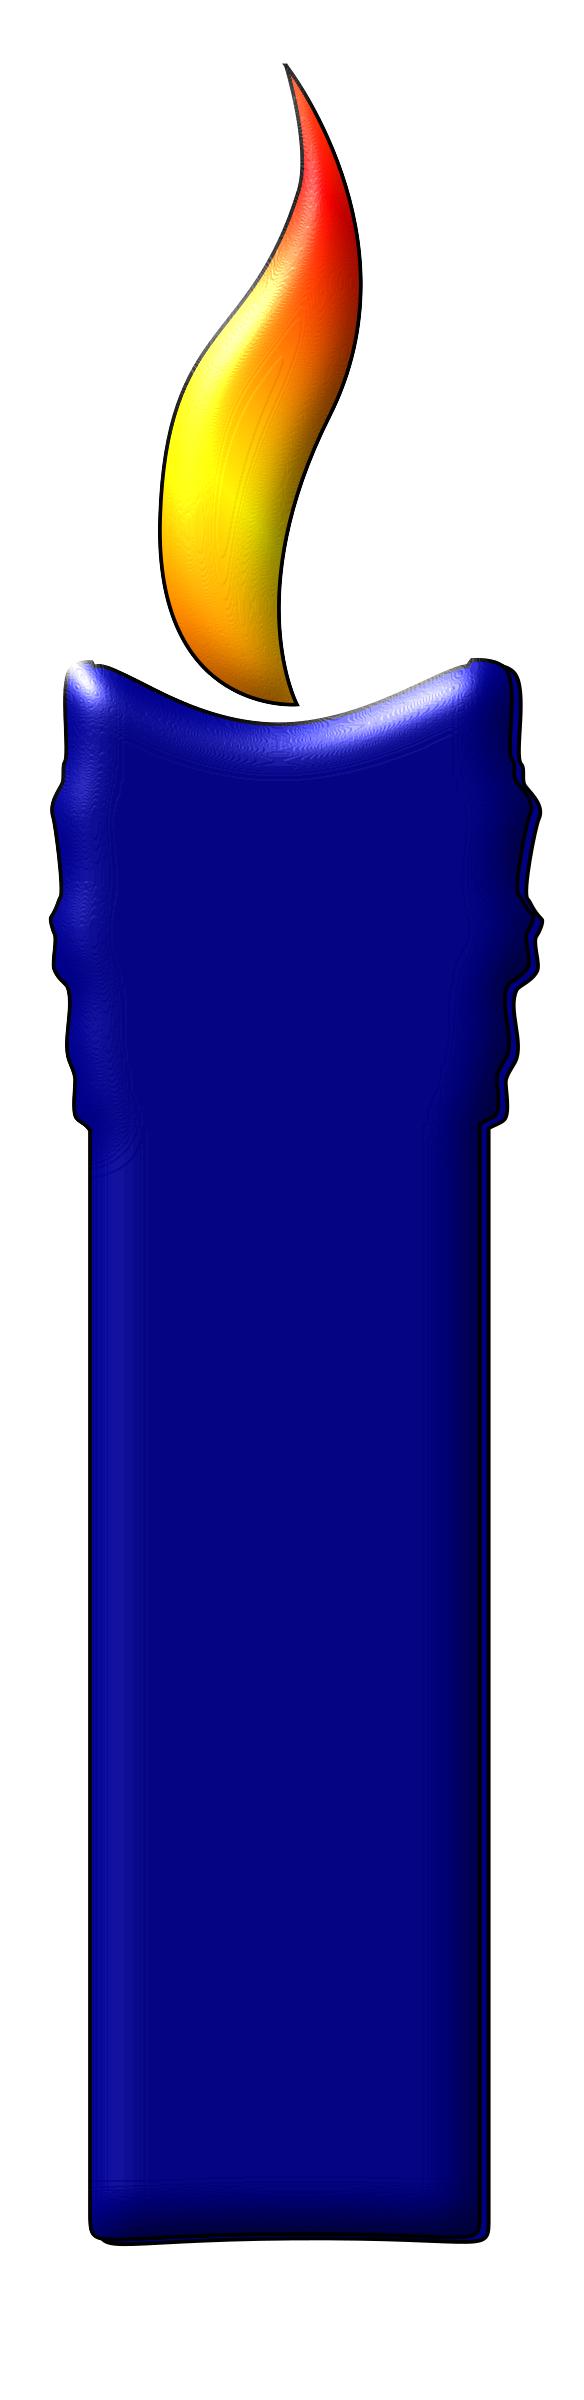 A Blue Color Candle png